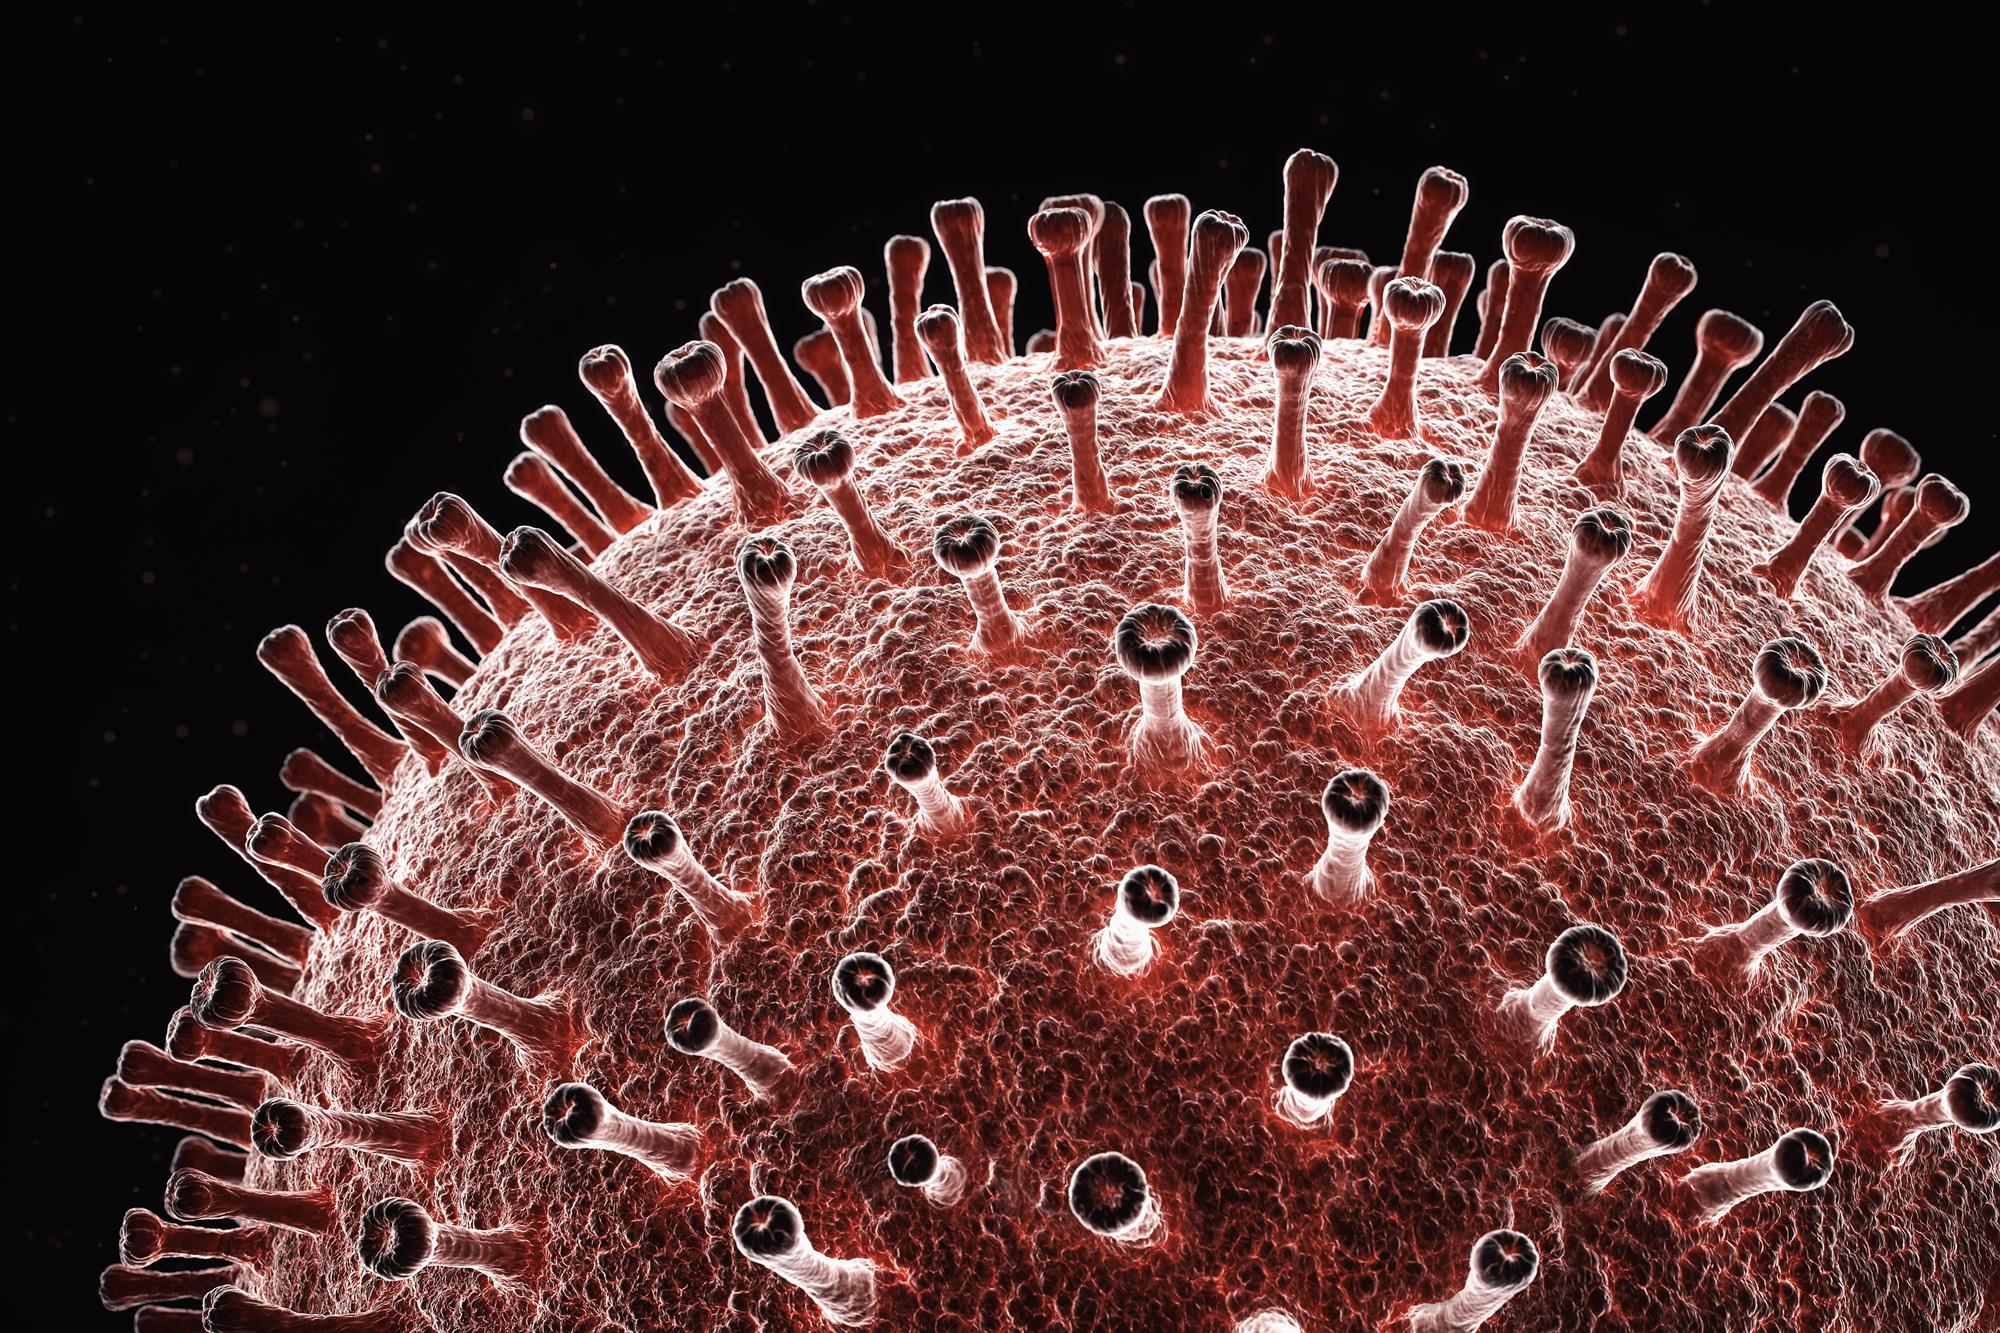 virus under microscope